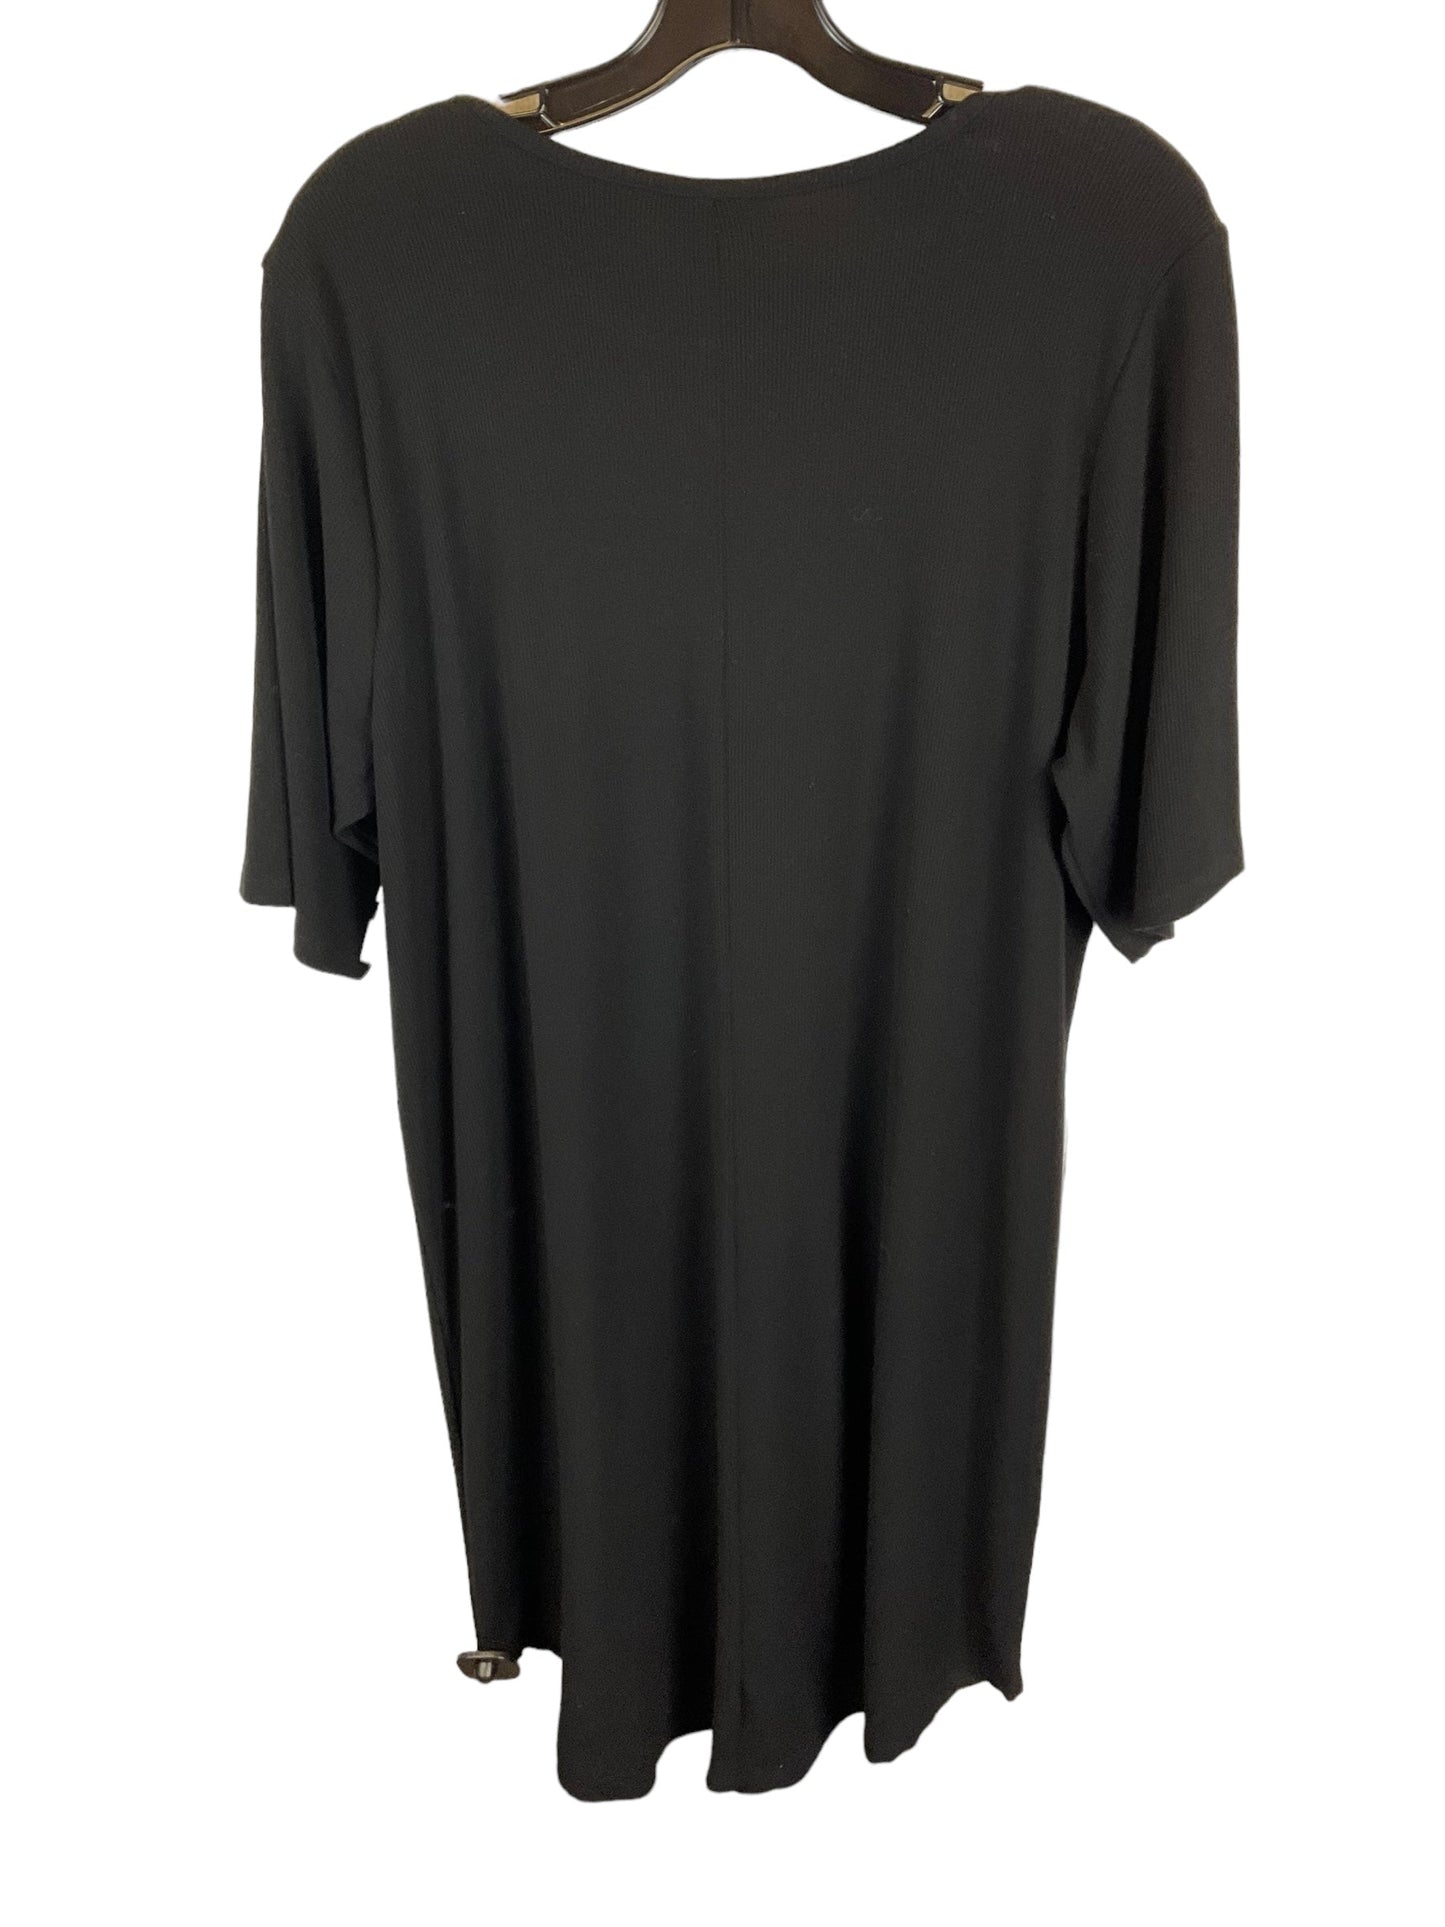 Black Dress Casual Short Torrid, Size 2x